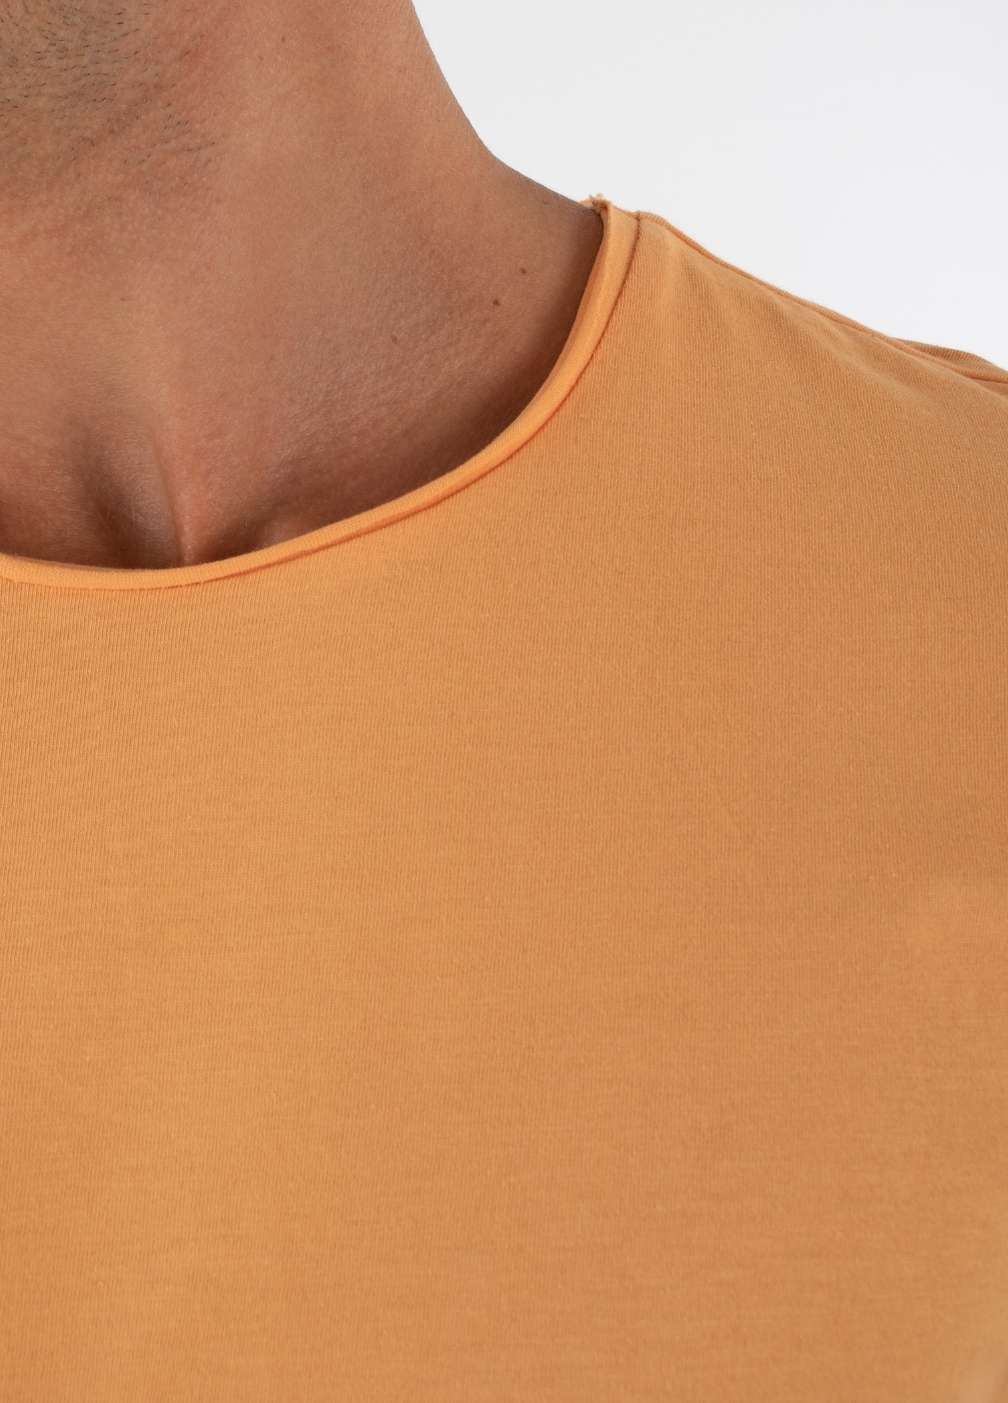 GOLD EARTH T-SHIRT PRINT closeup - image of shirt collar - 100% organic cotton t shirts